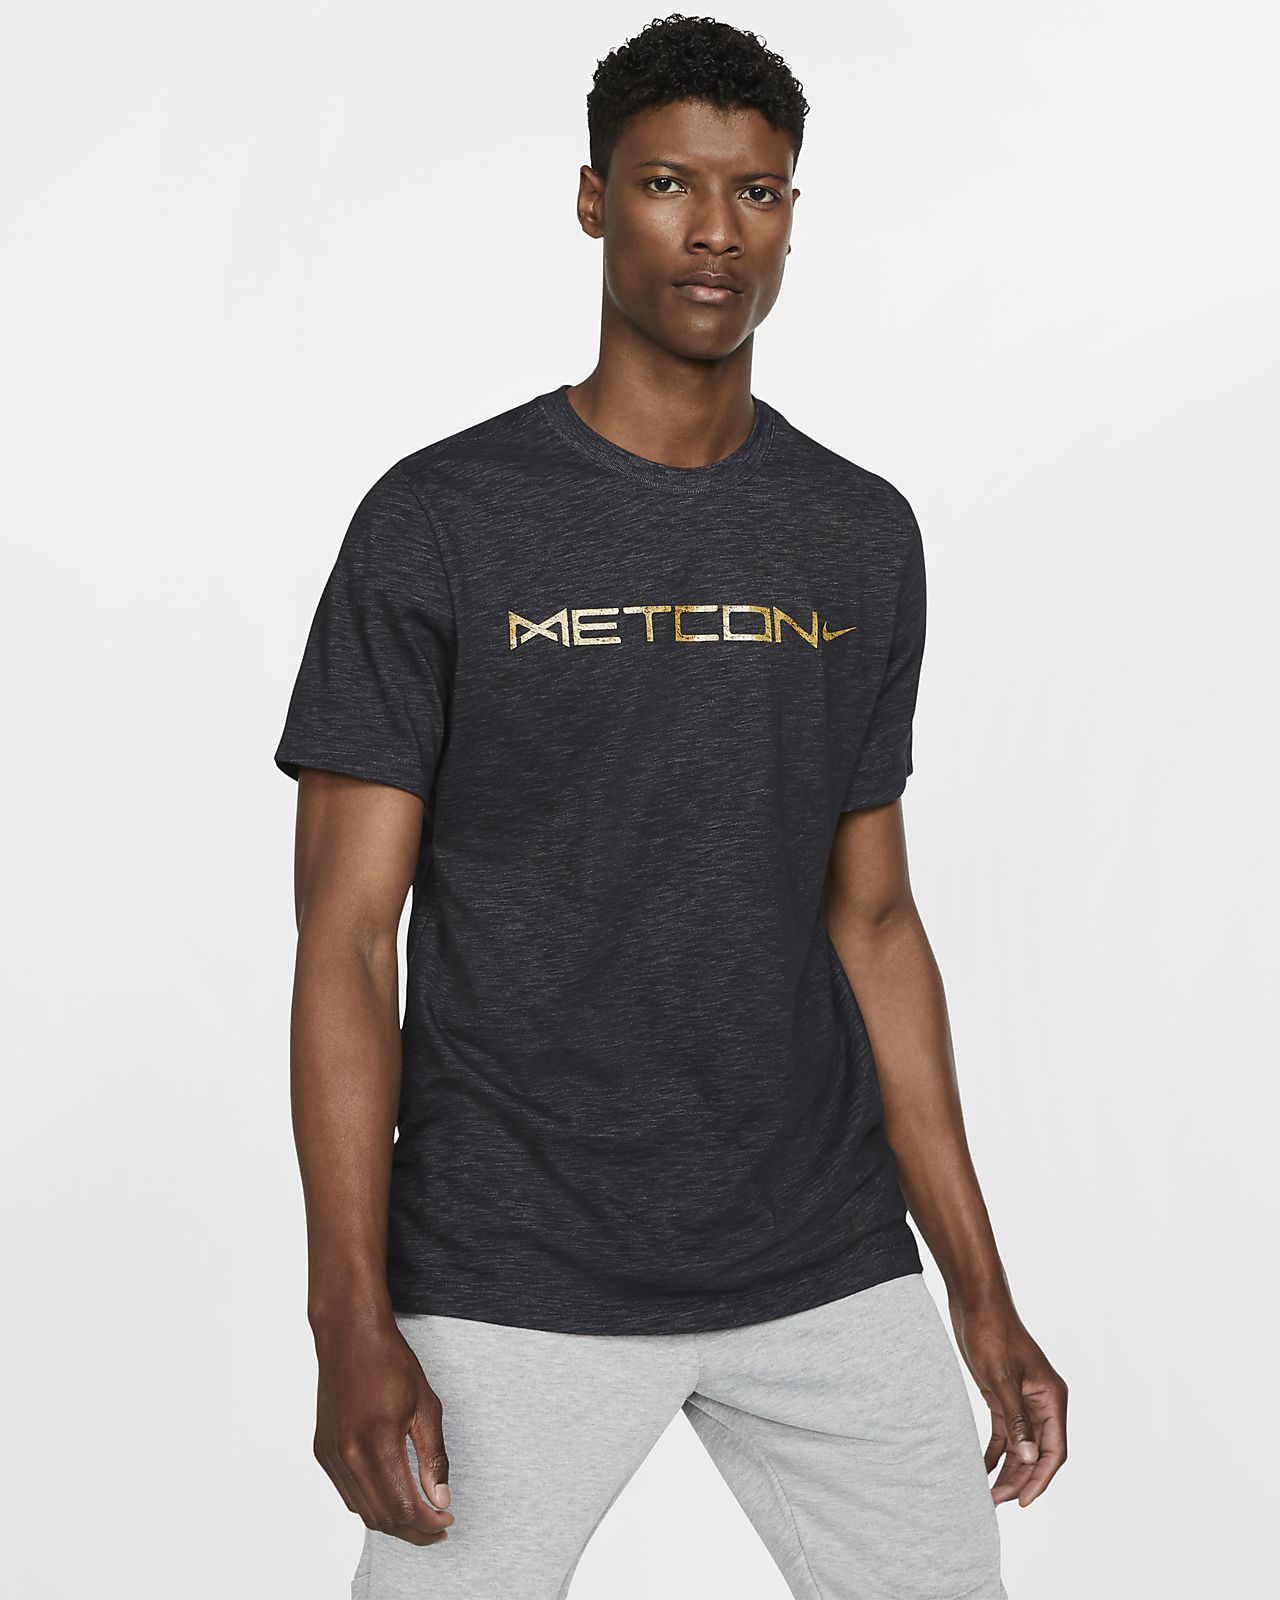 Nike Dri Fit Metcon Men S Training T Shirt Nike Com